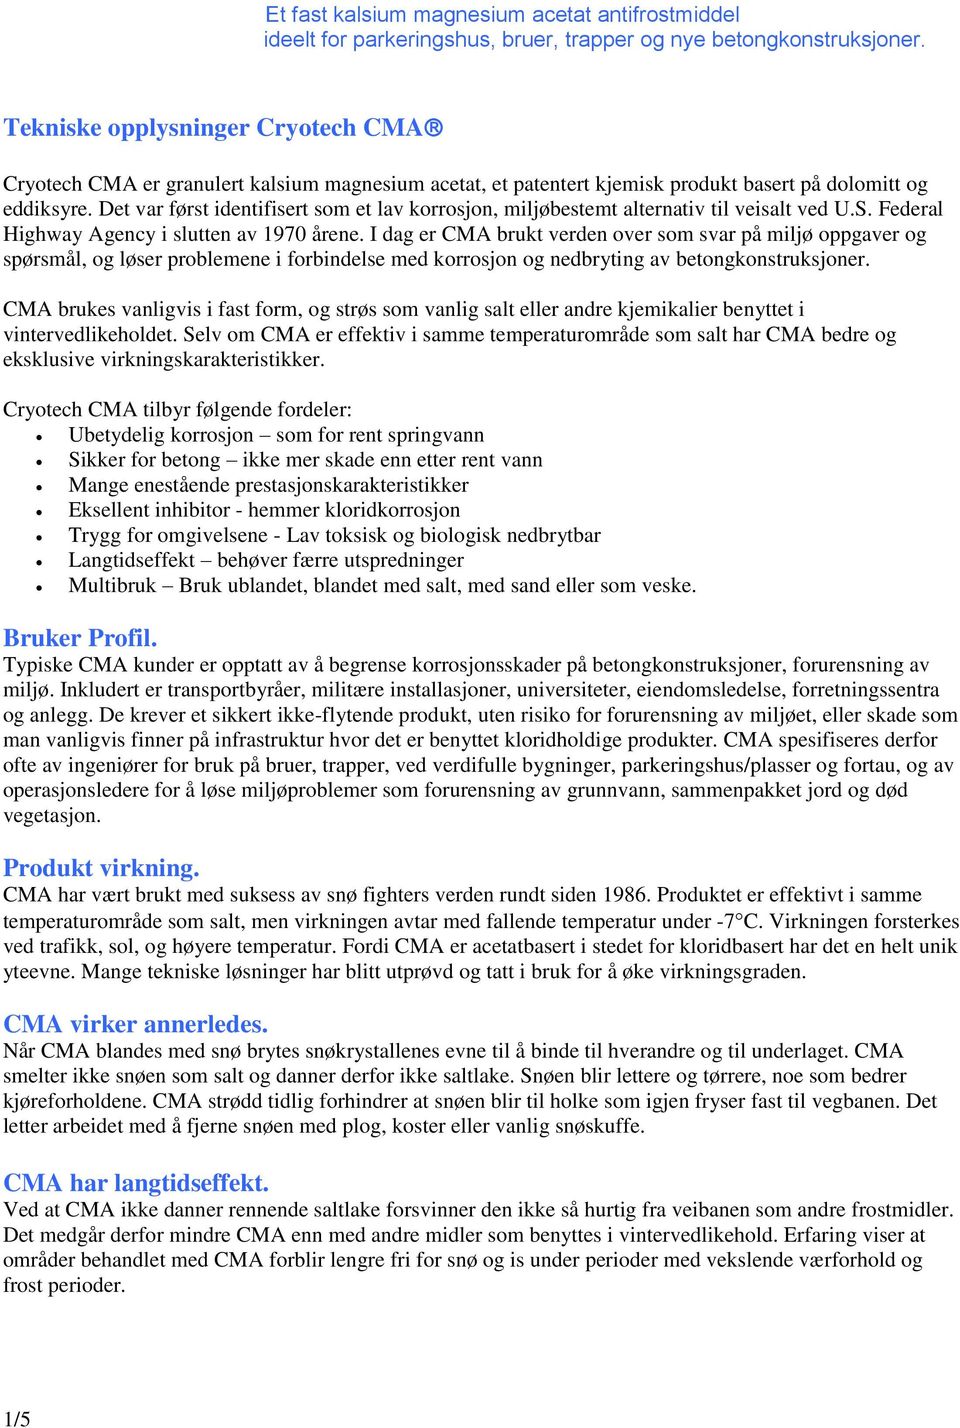 Tekniske opplysninger Cryotech CMA - PDF Gratis nedlasting